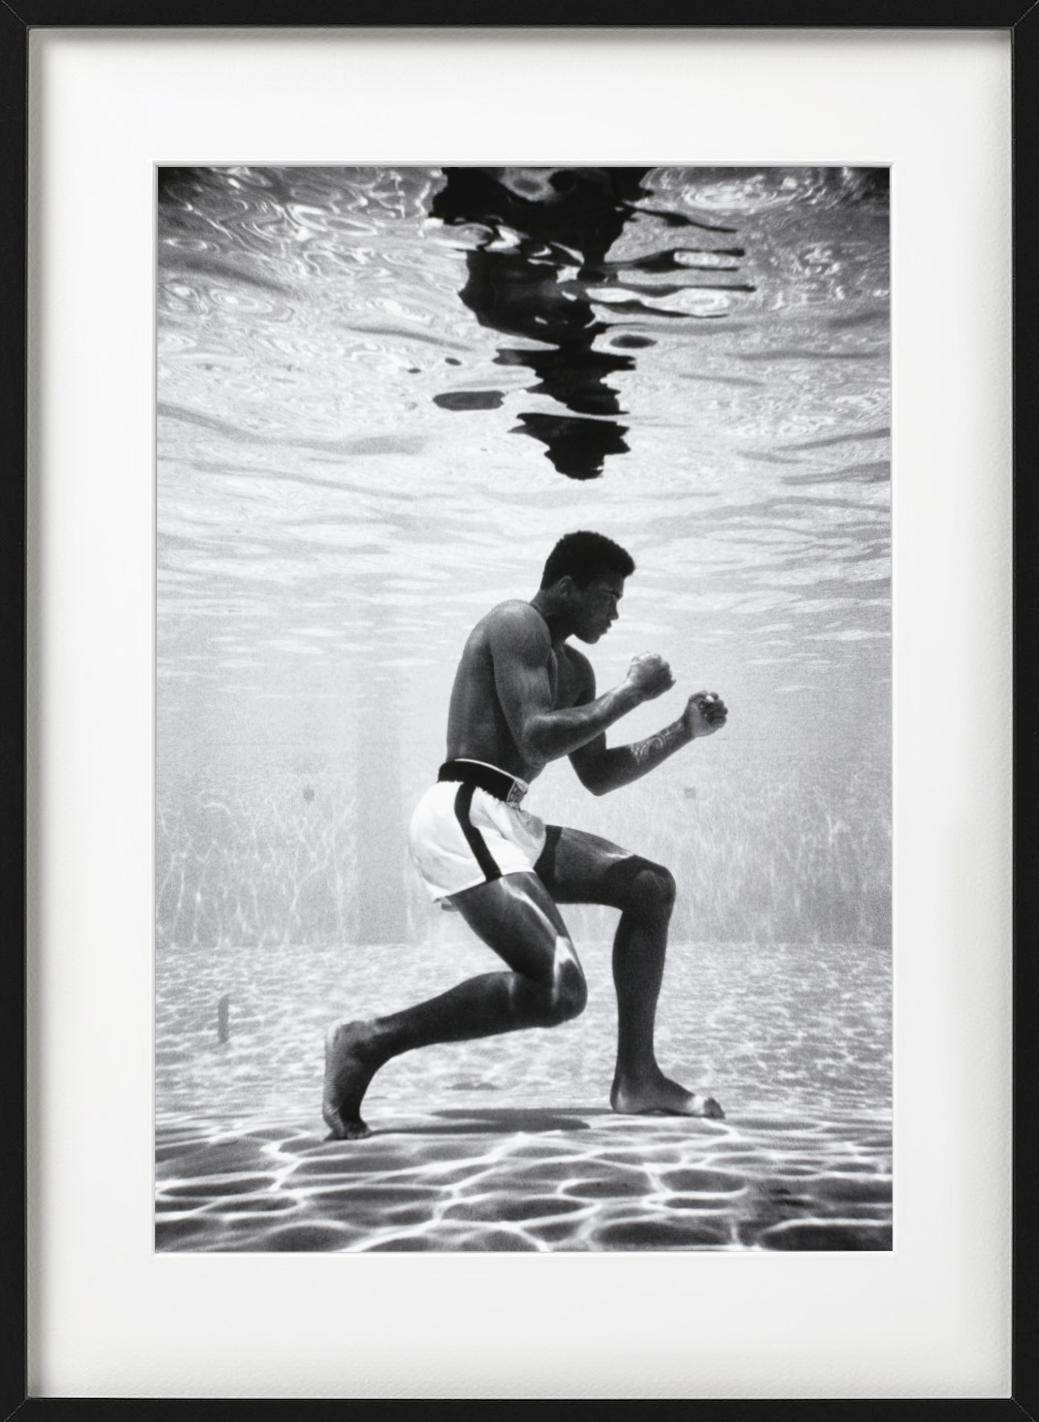 Ali Underwater - boxer Muhammad Ali training underwater in a pool - Photograph by Flip Schulke